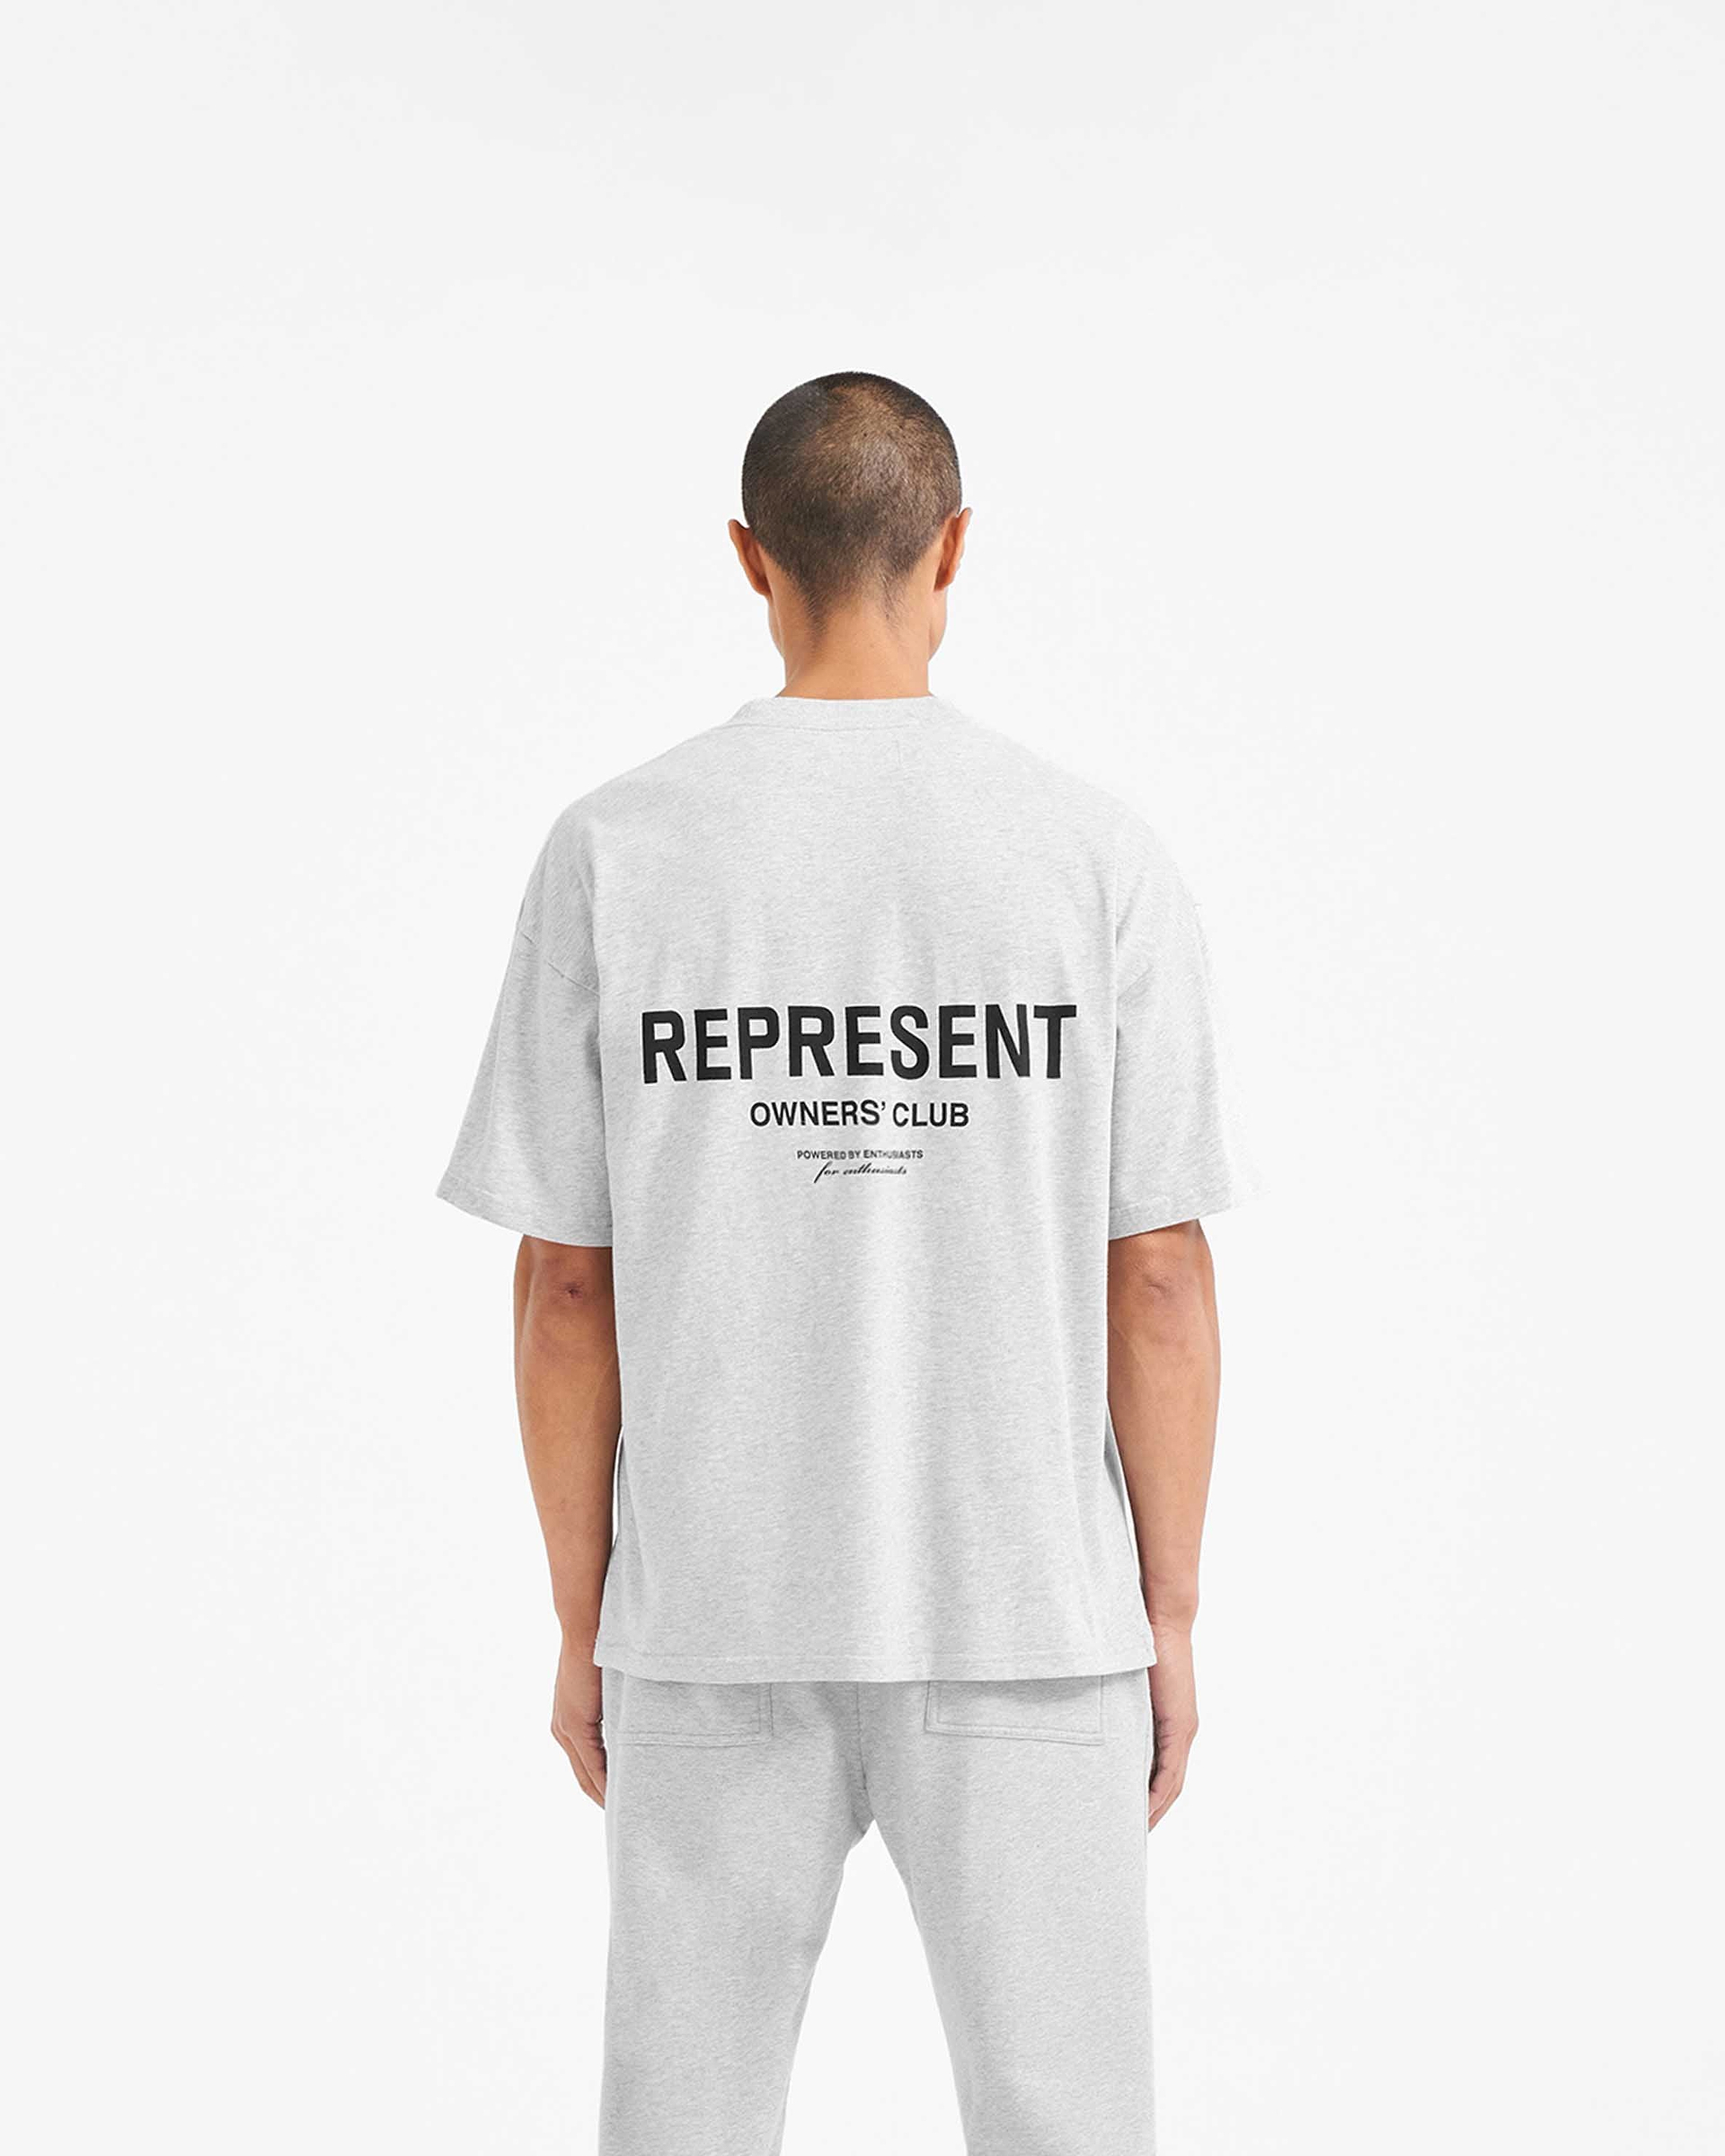 Ash Grey T-Shirt | REPRESENT CLO Club Owners\' 